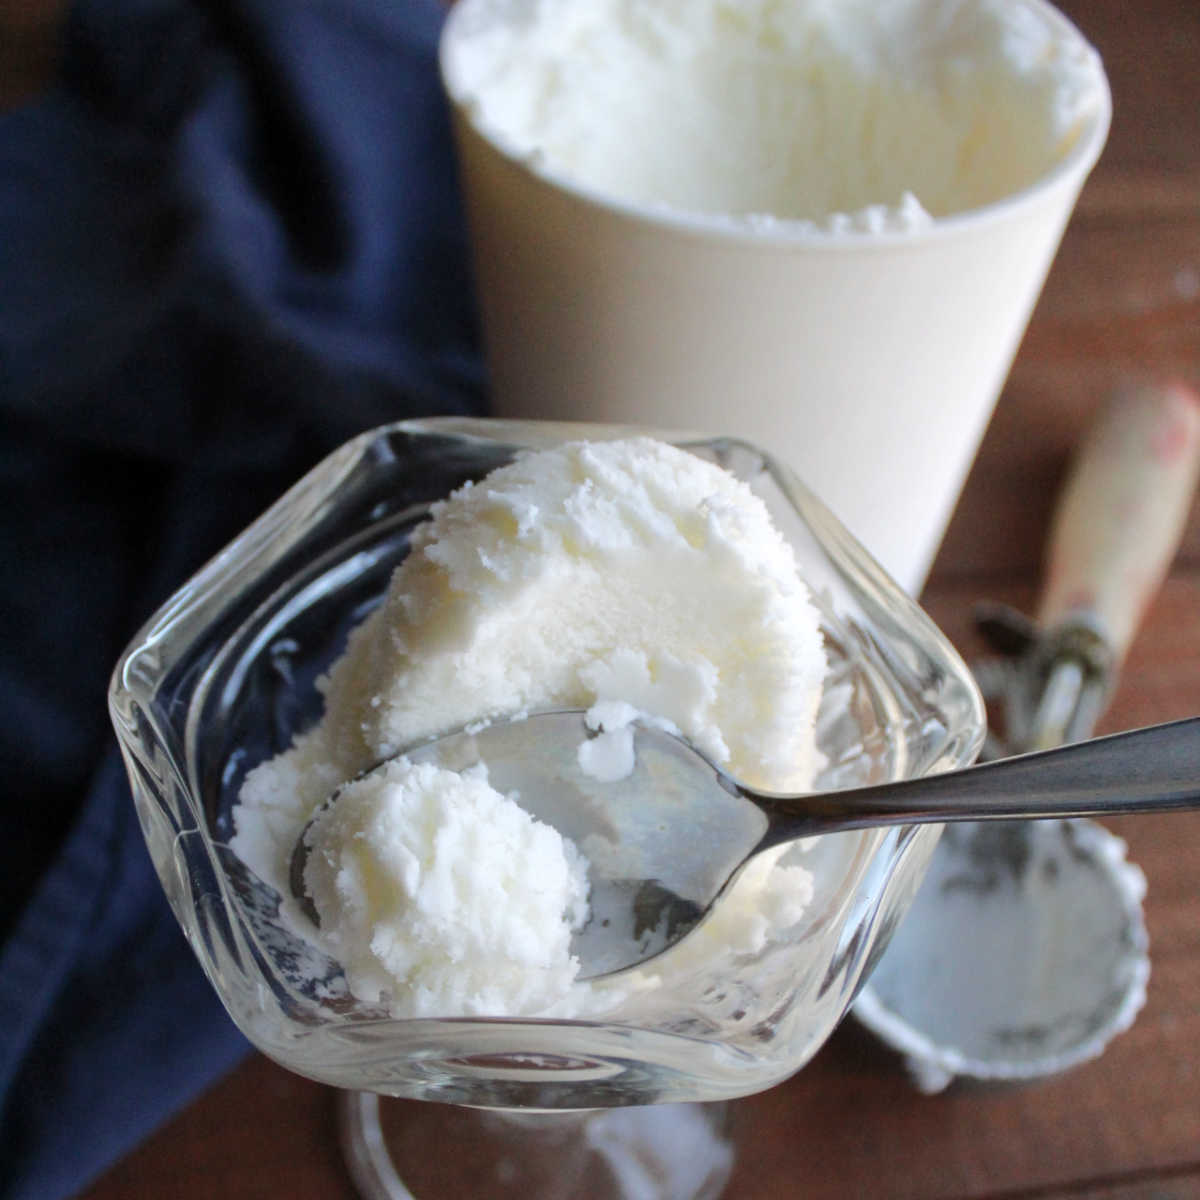 Spoon getting a bite of smooth vanilla half and half ice cream.